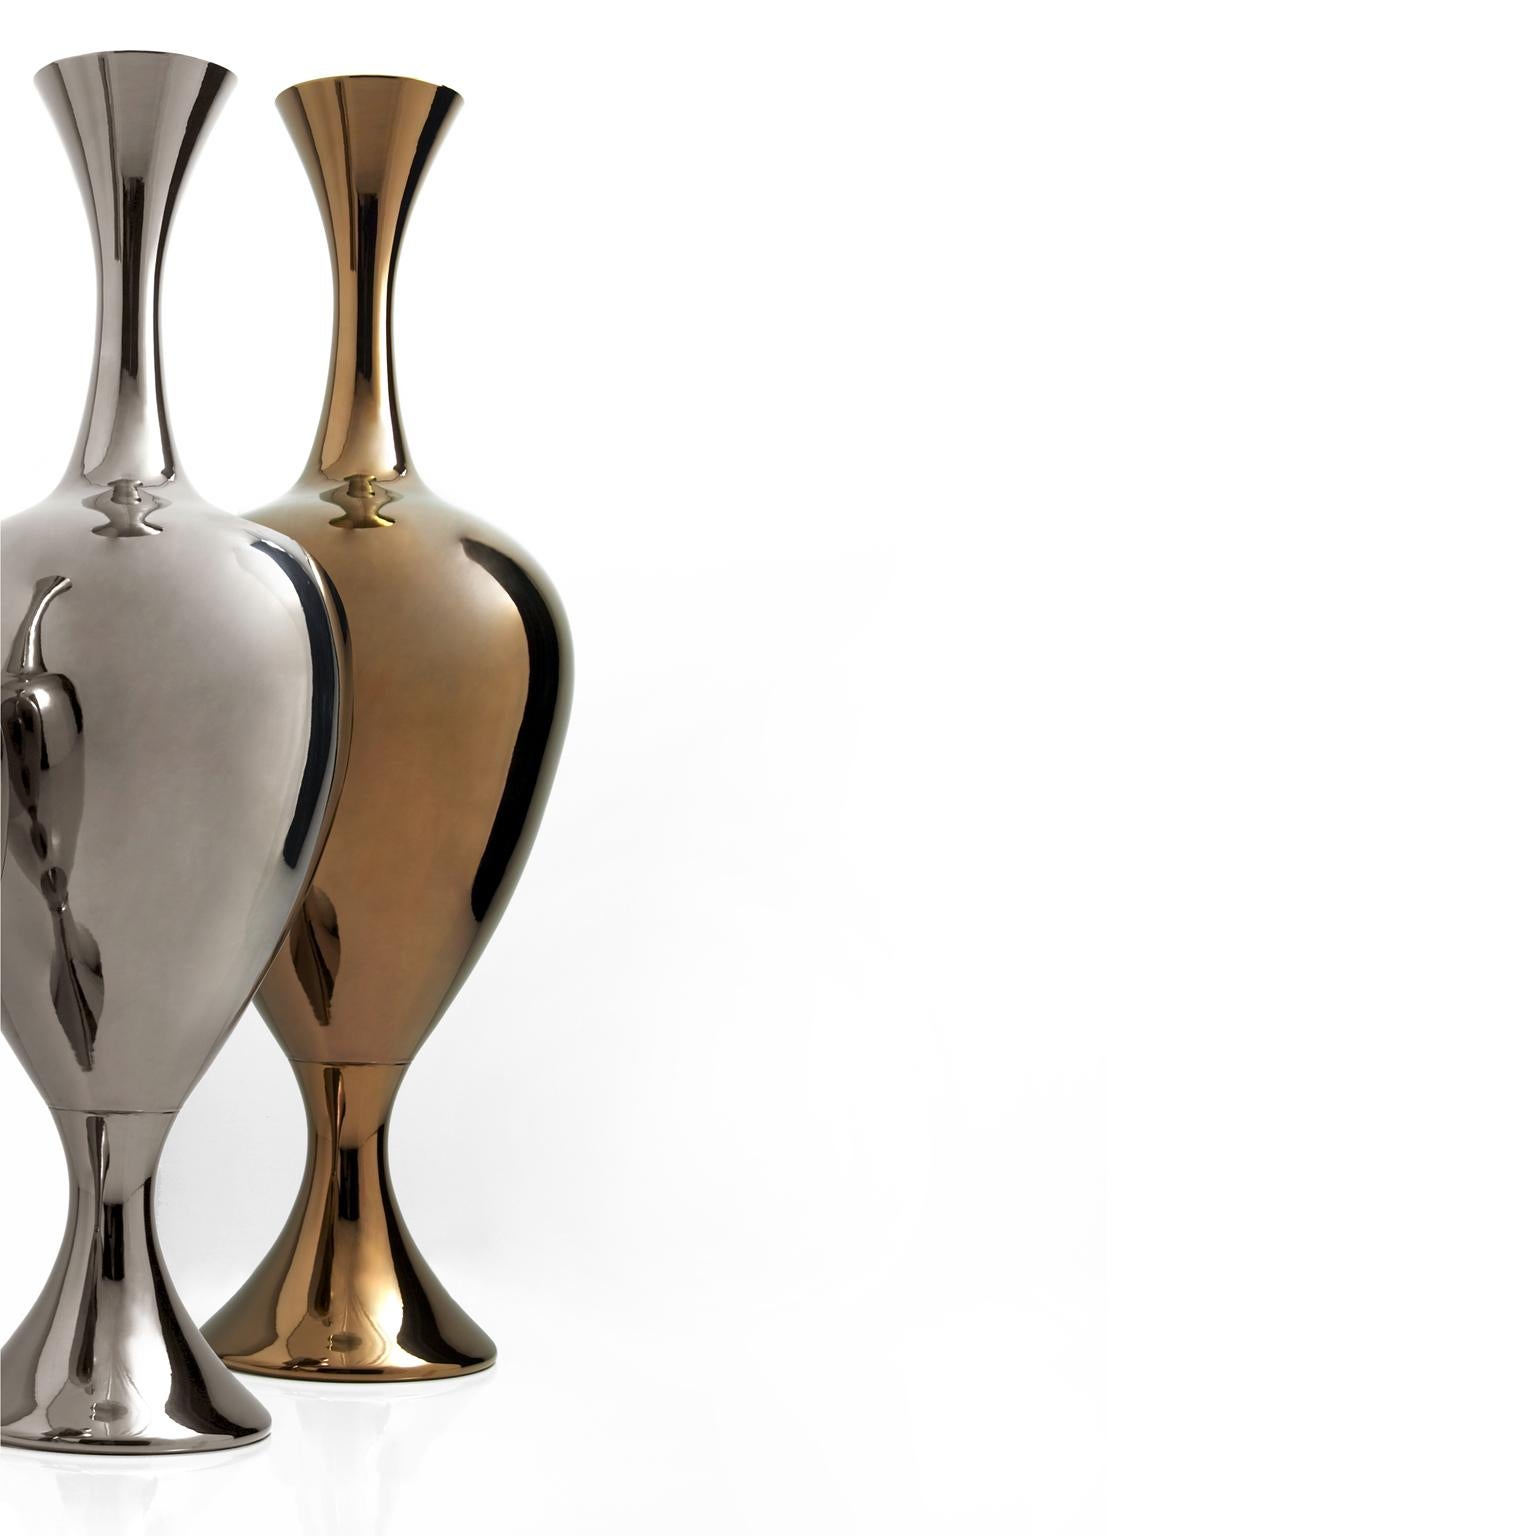 EVE - Ceramic vase handcrafted in bronze

code VS004
measures: Height 140.0 cm., diameter 45.0 cm.